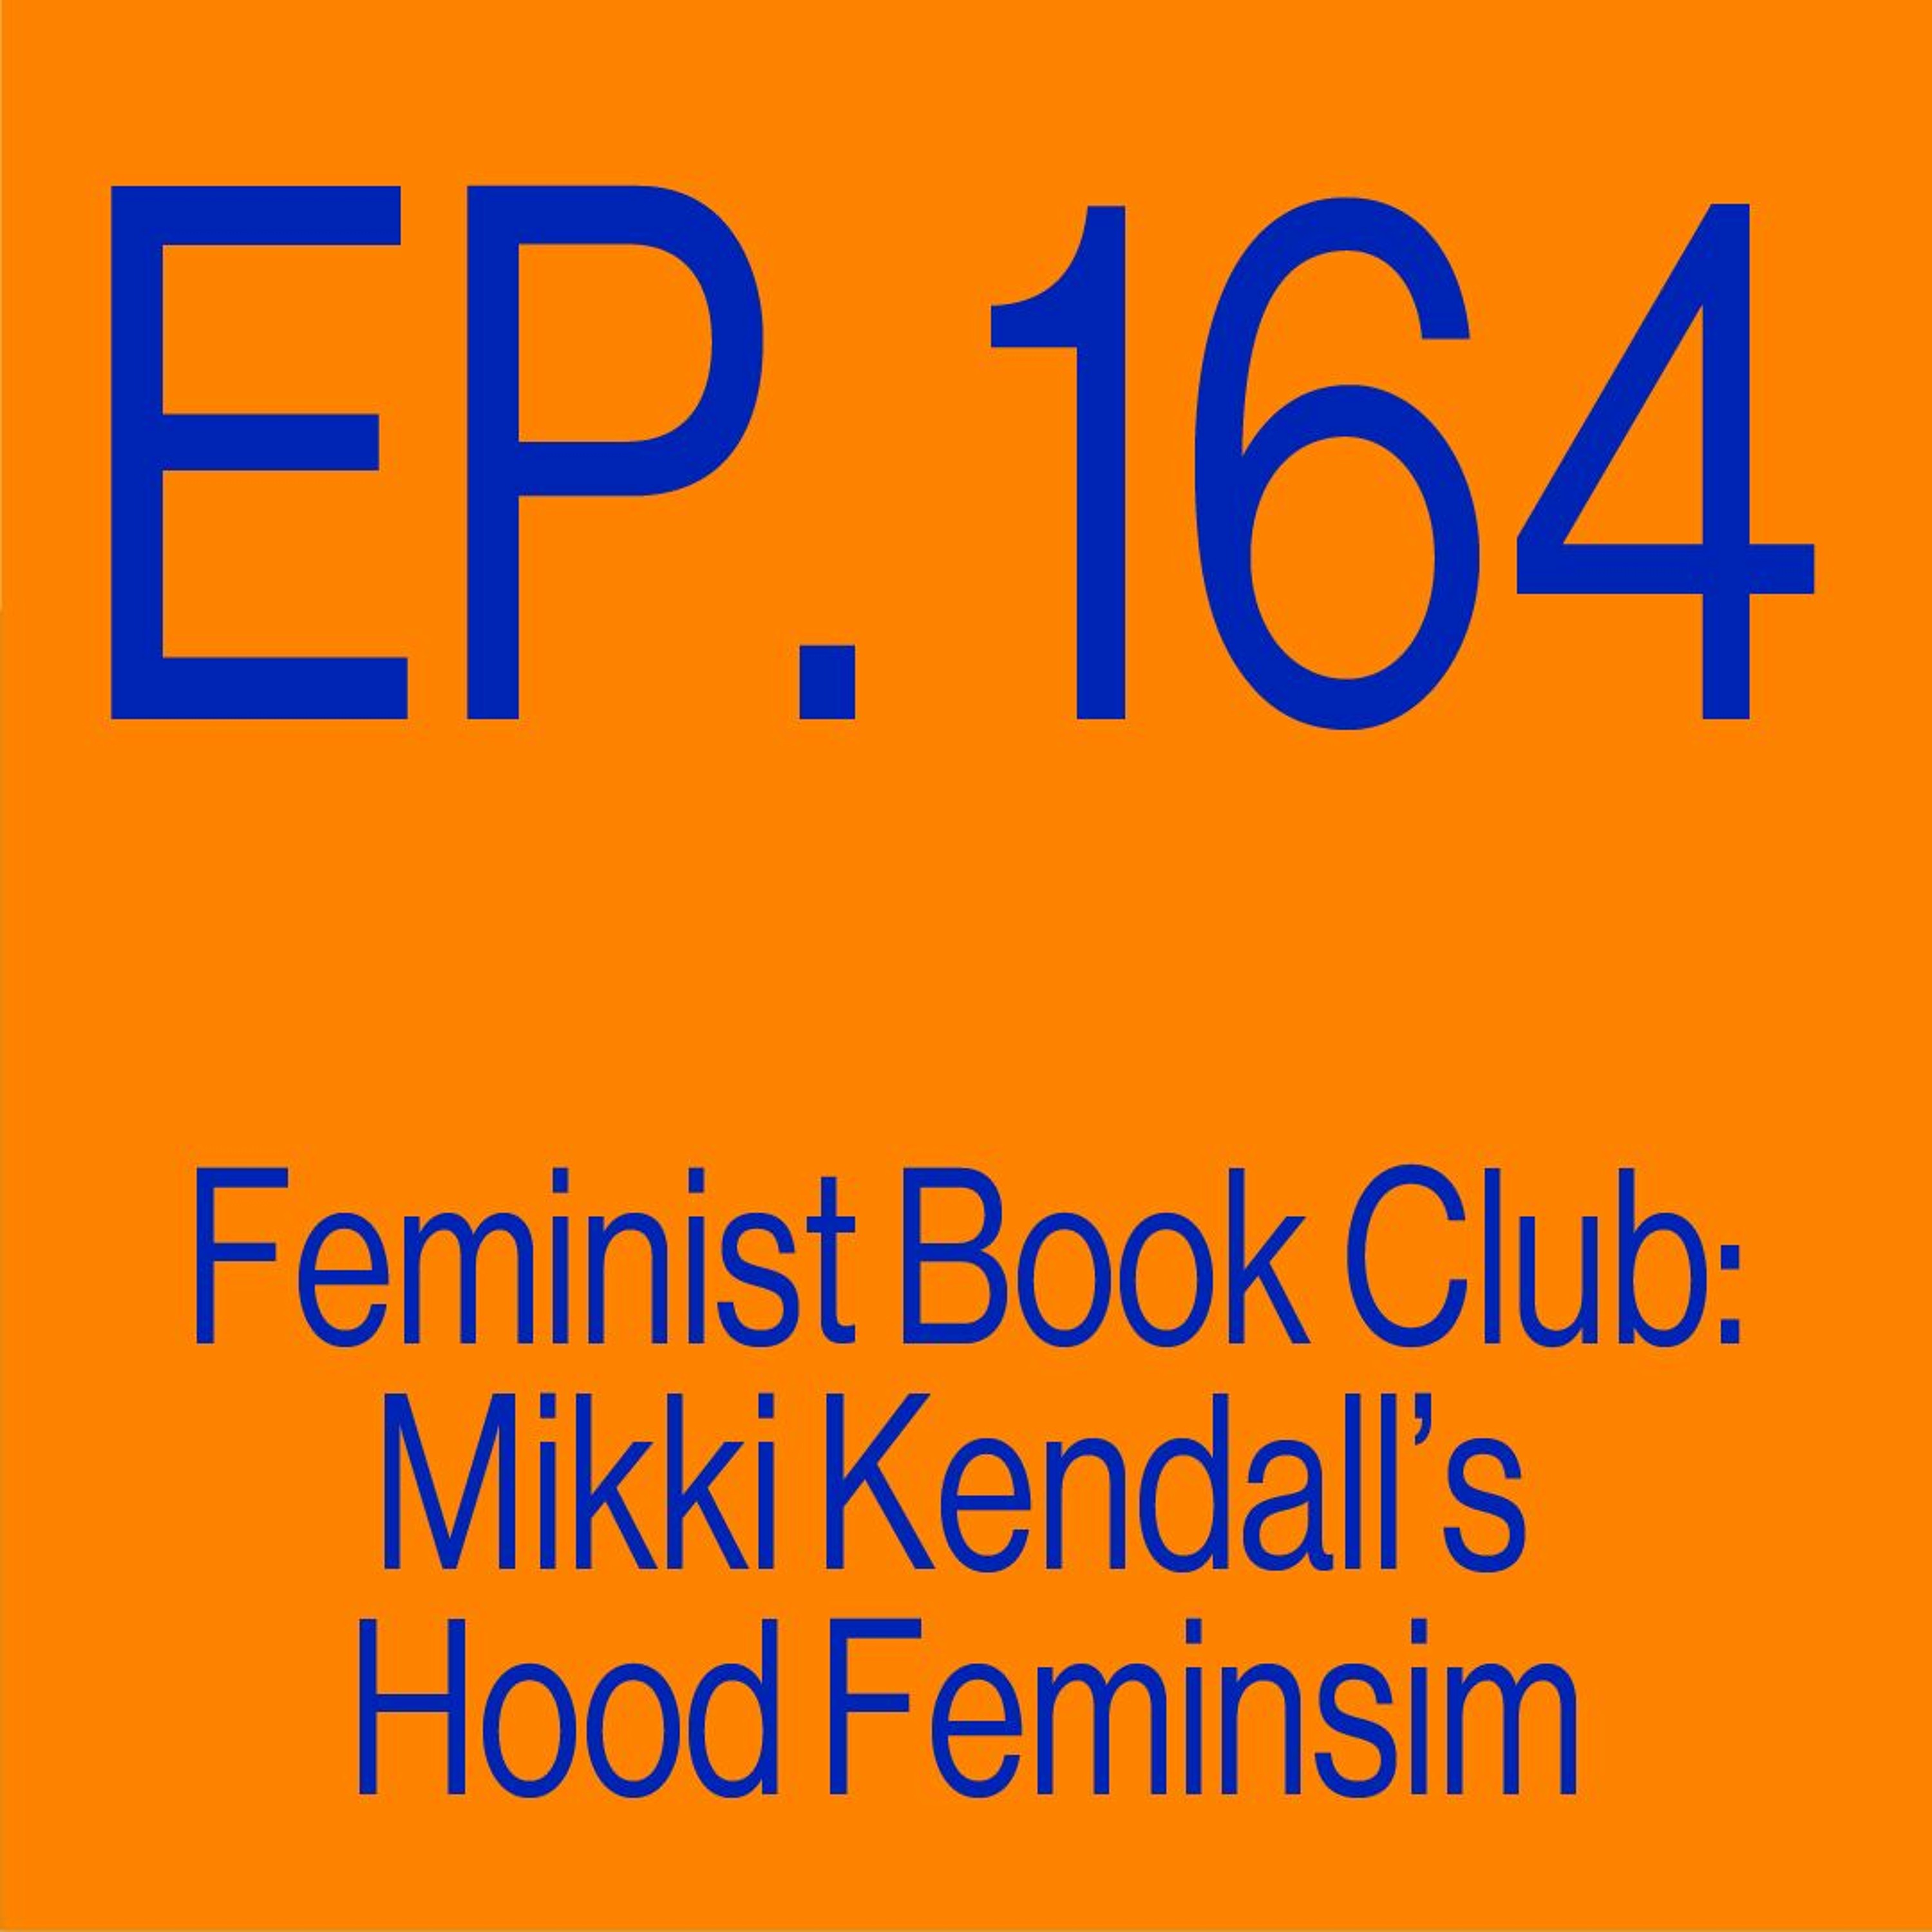 Episode 164: Feminist Book Club: Mikki Kendall's Hood Feminism